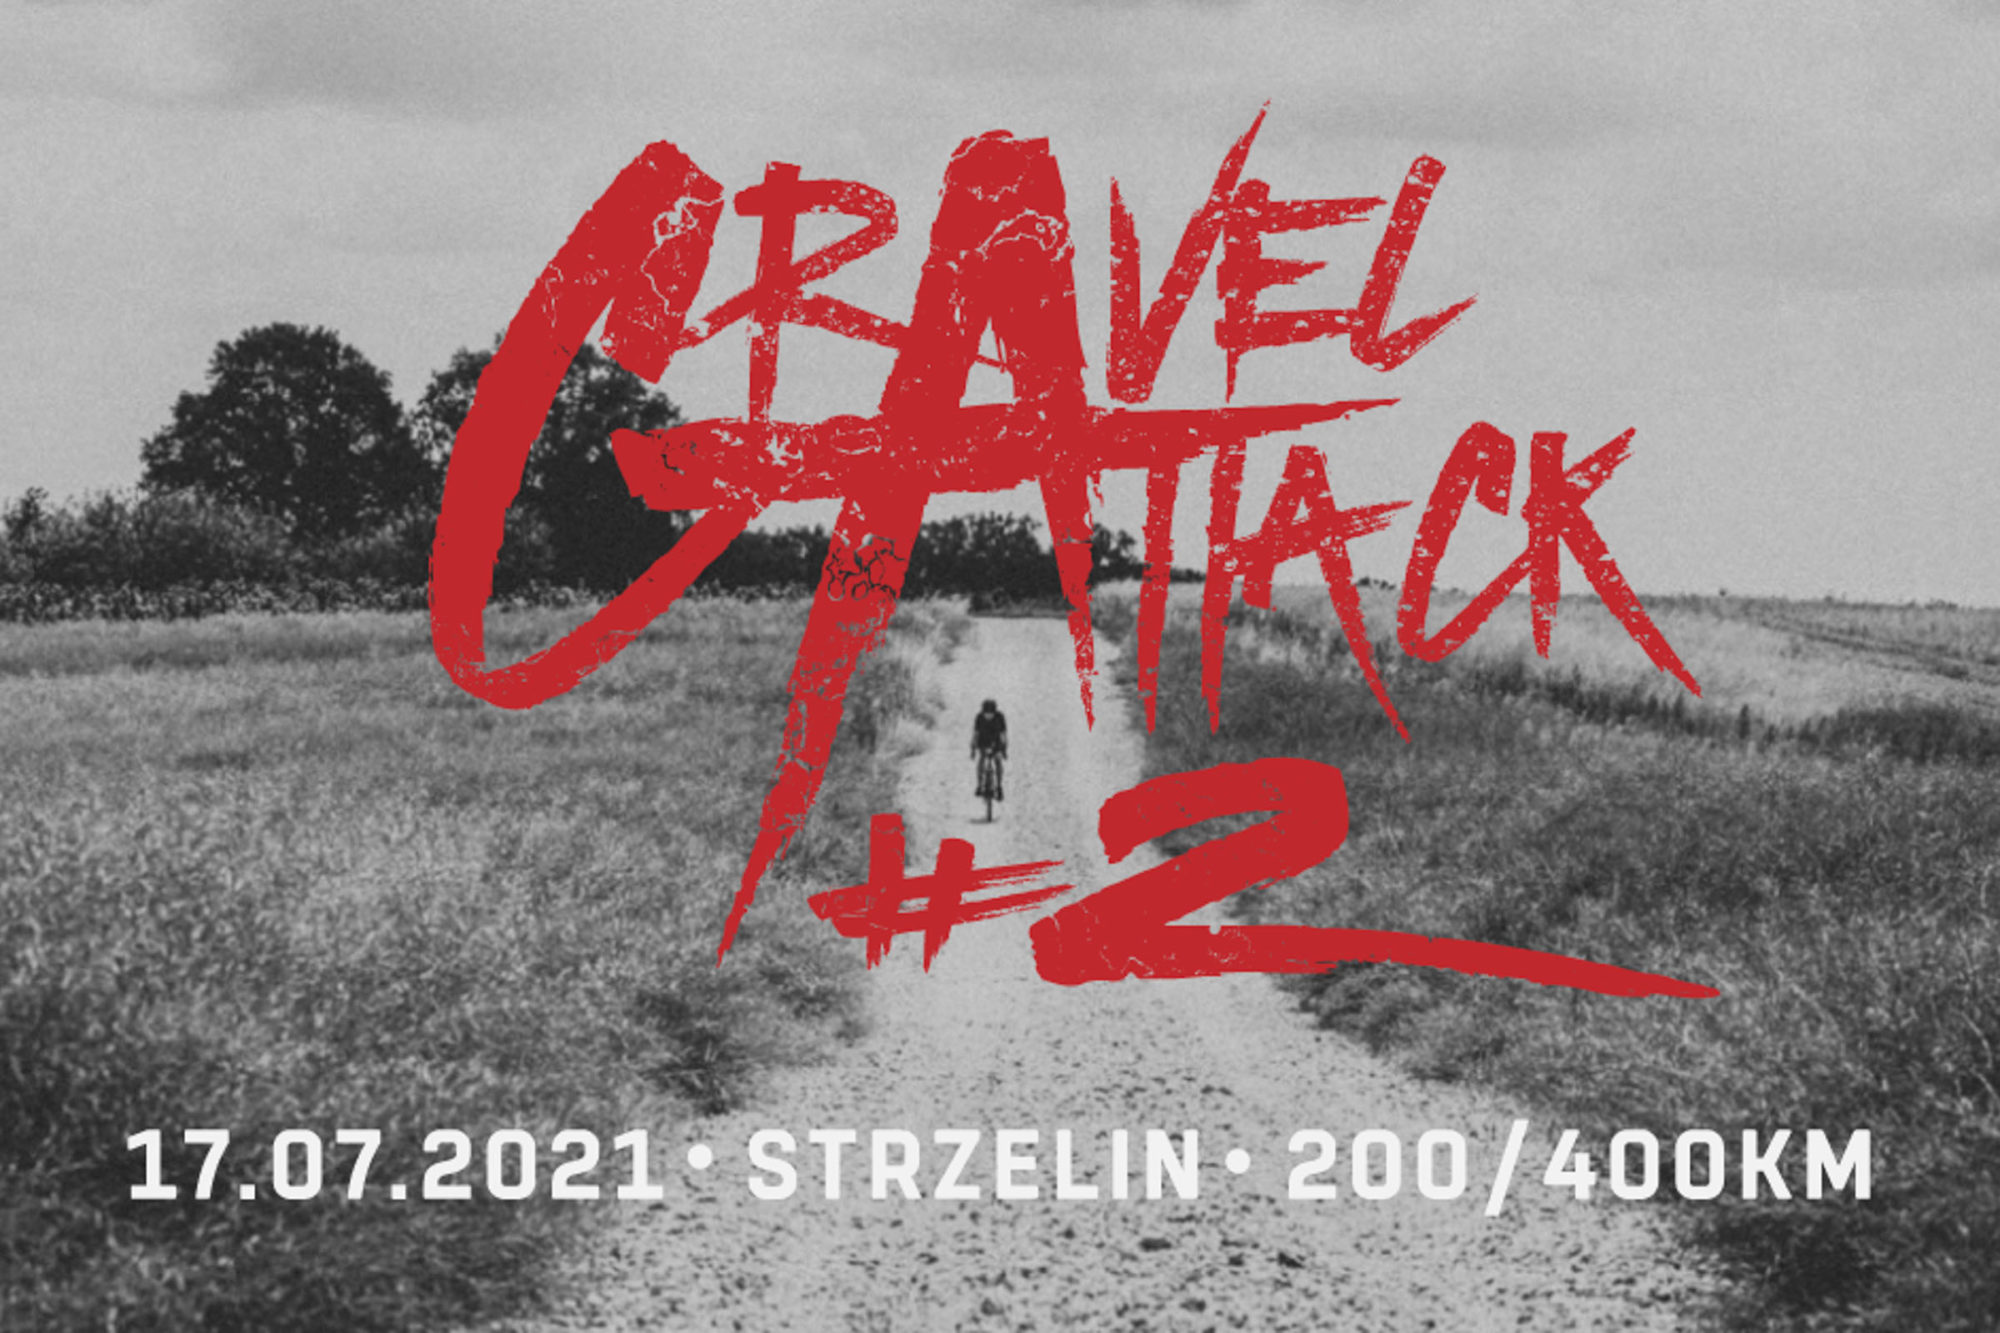 Gravel Attack Poland